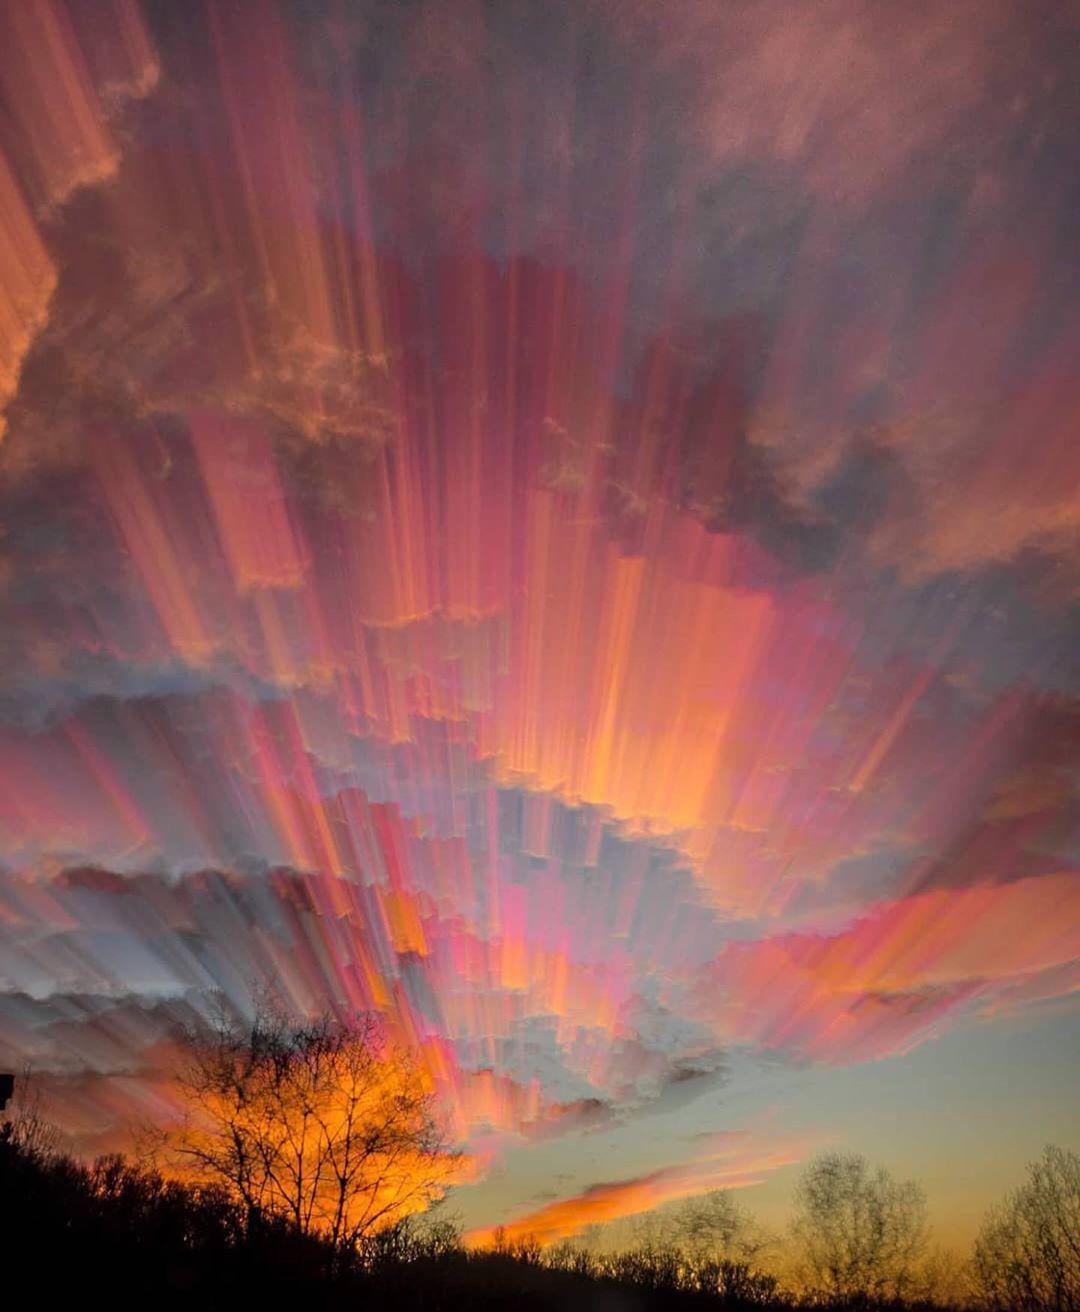  日落延时下的云，来自摄影师Frank Lee Ruggles。 